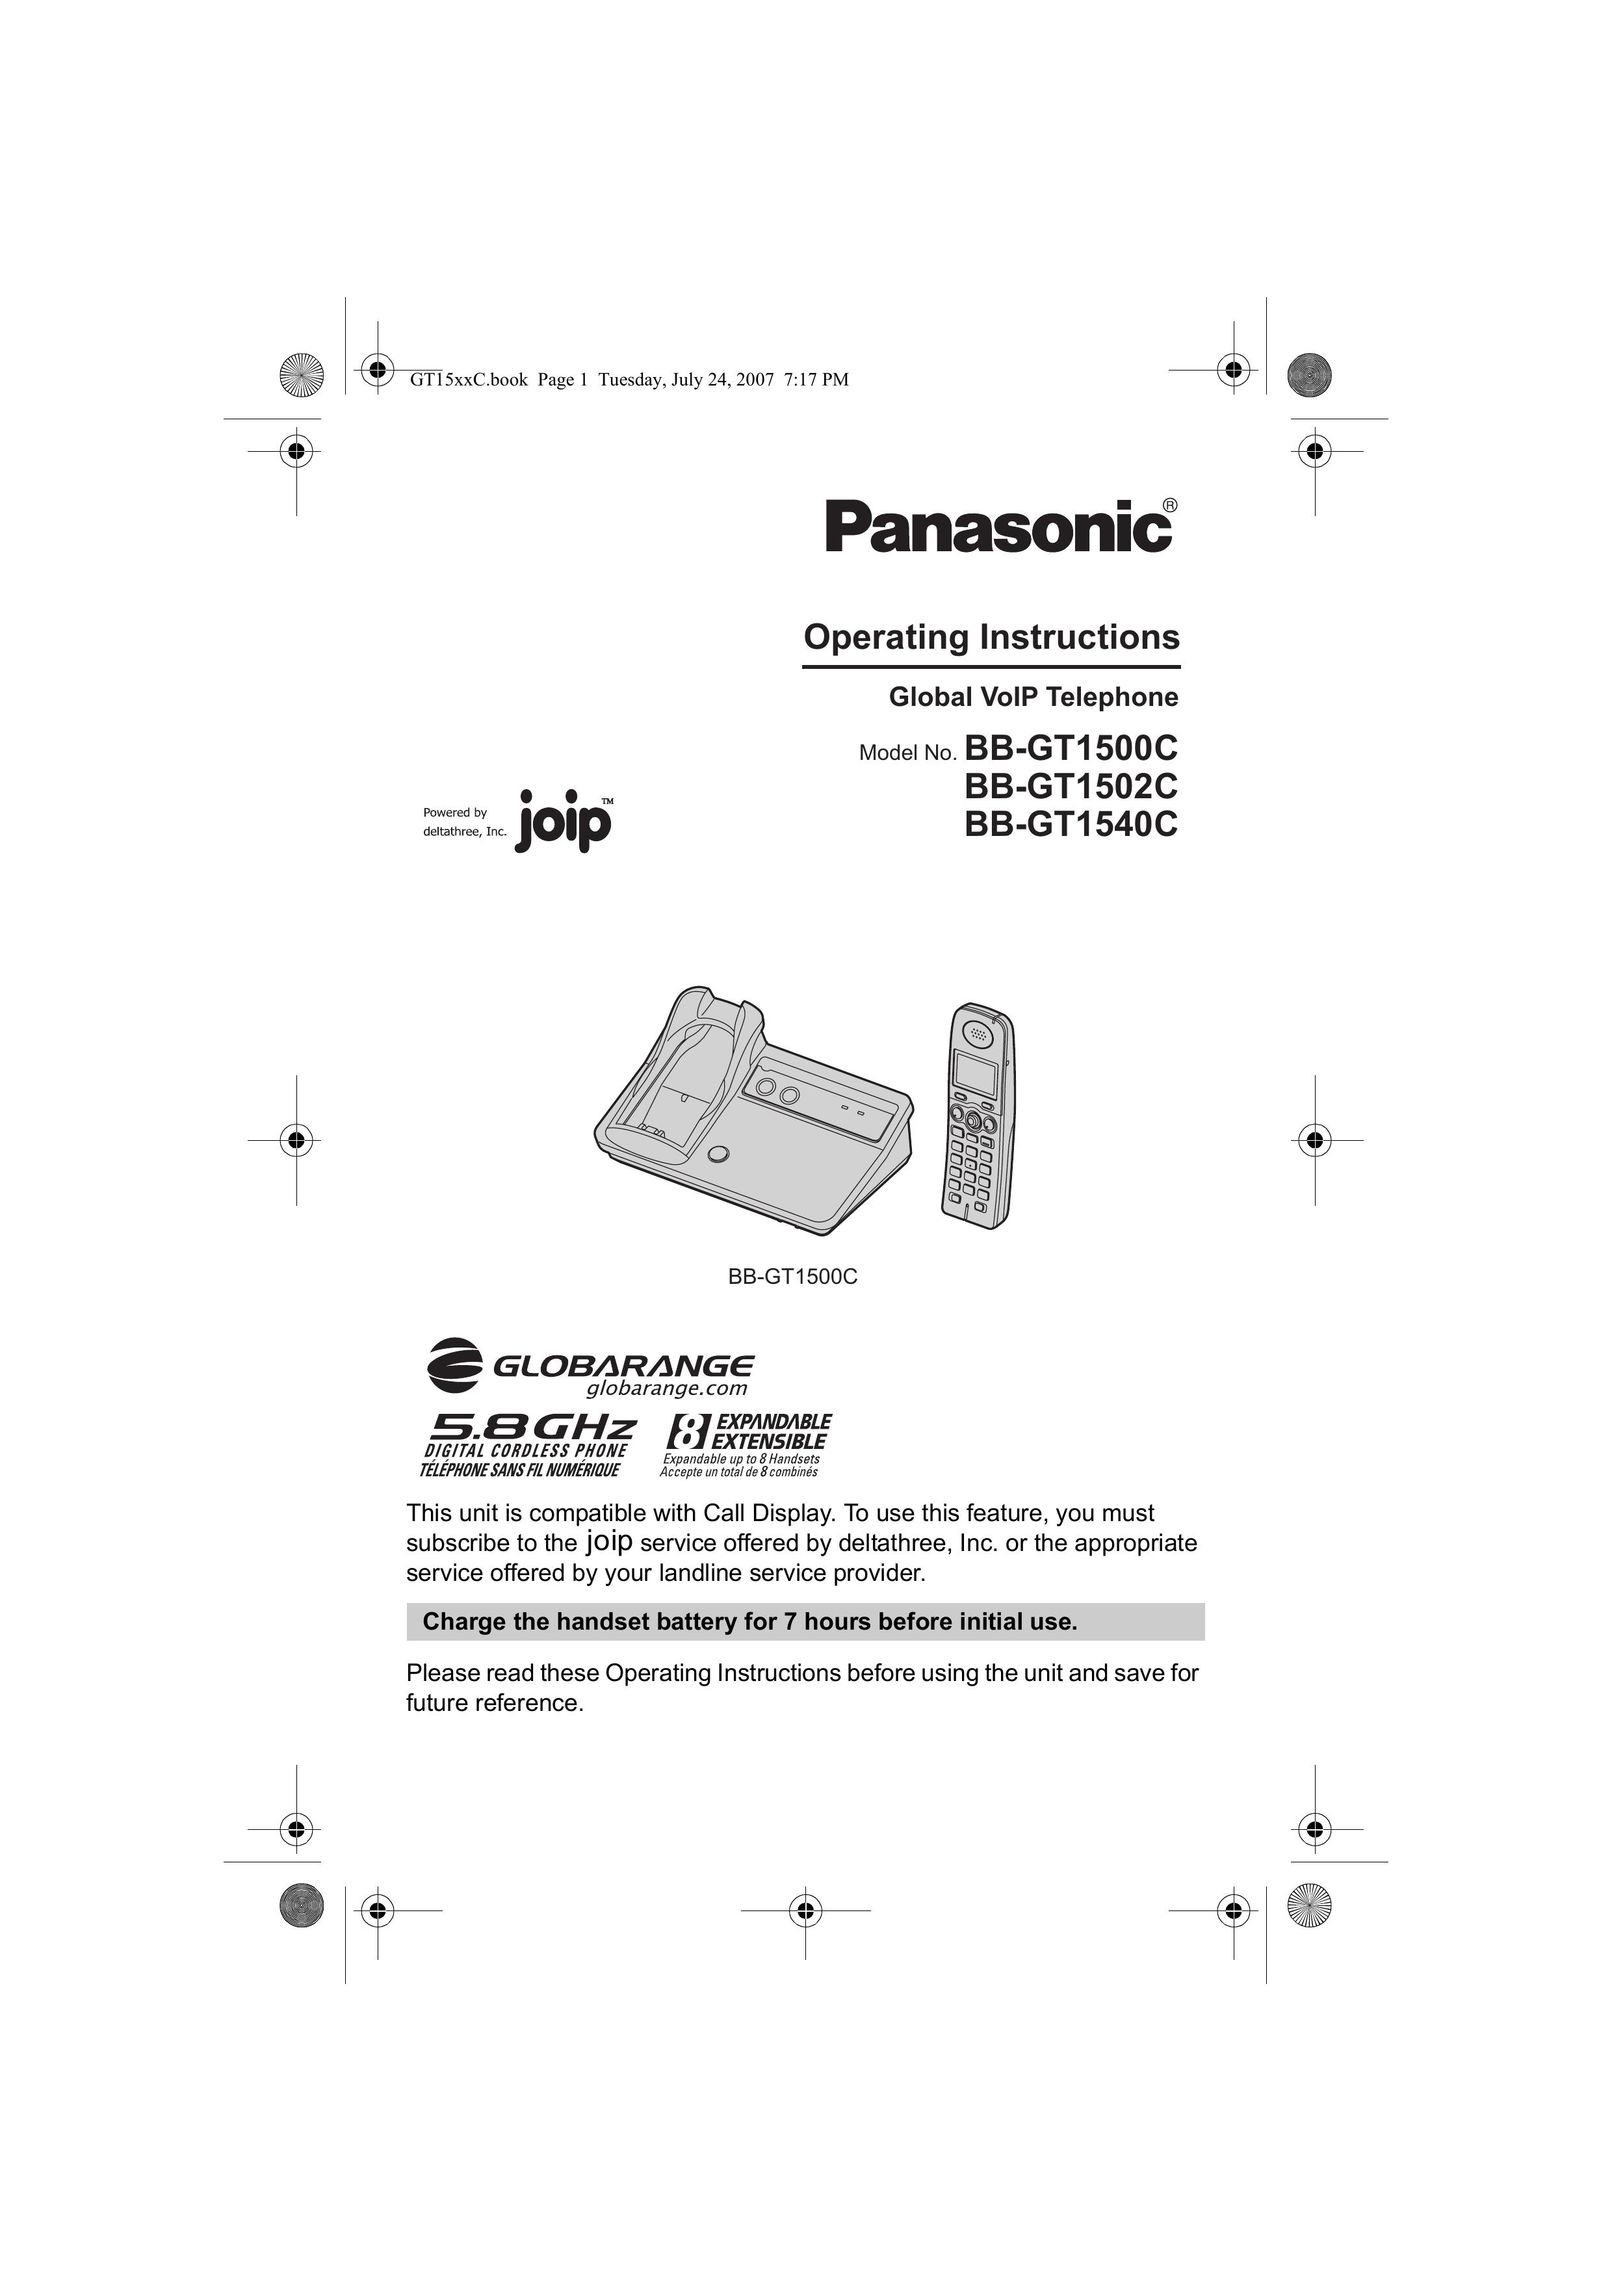 Panasonic BB-GT1540C Telephone User Manual